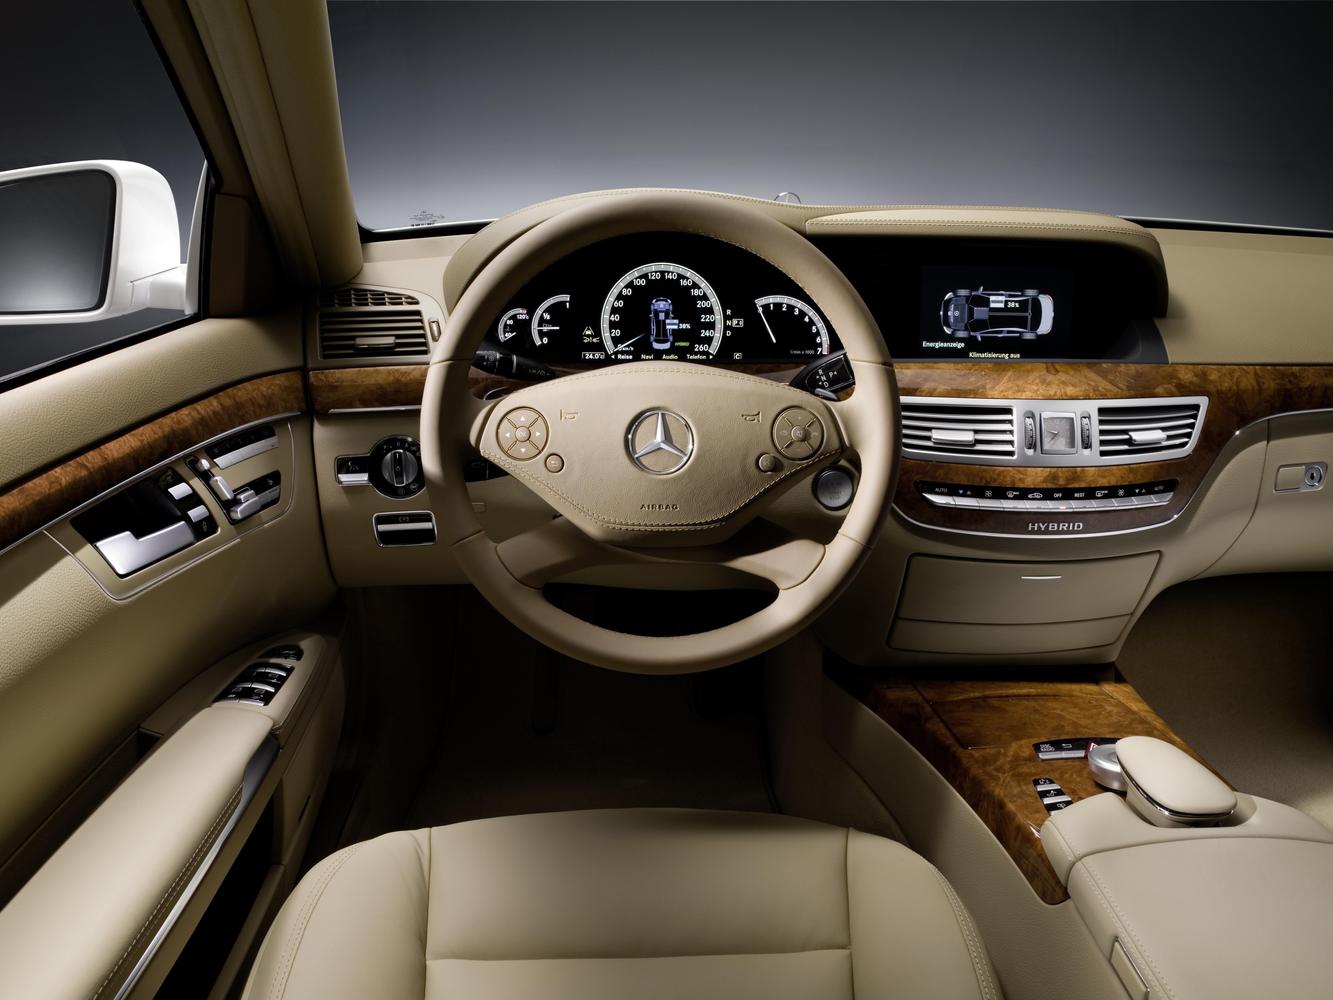 седан Mercedes-Benz S-klasse 2009 - 2013г выпуска модификация 2.1 AT (204 л.с.)